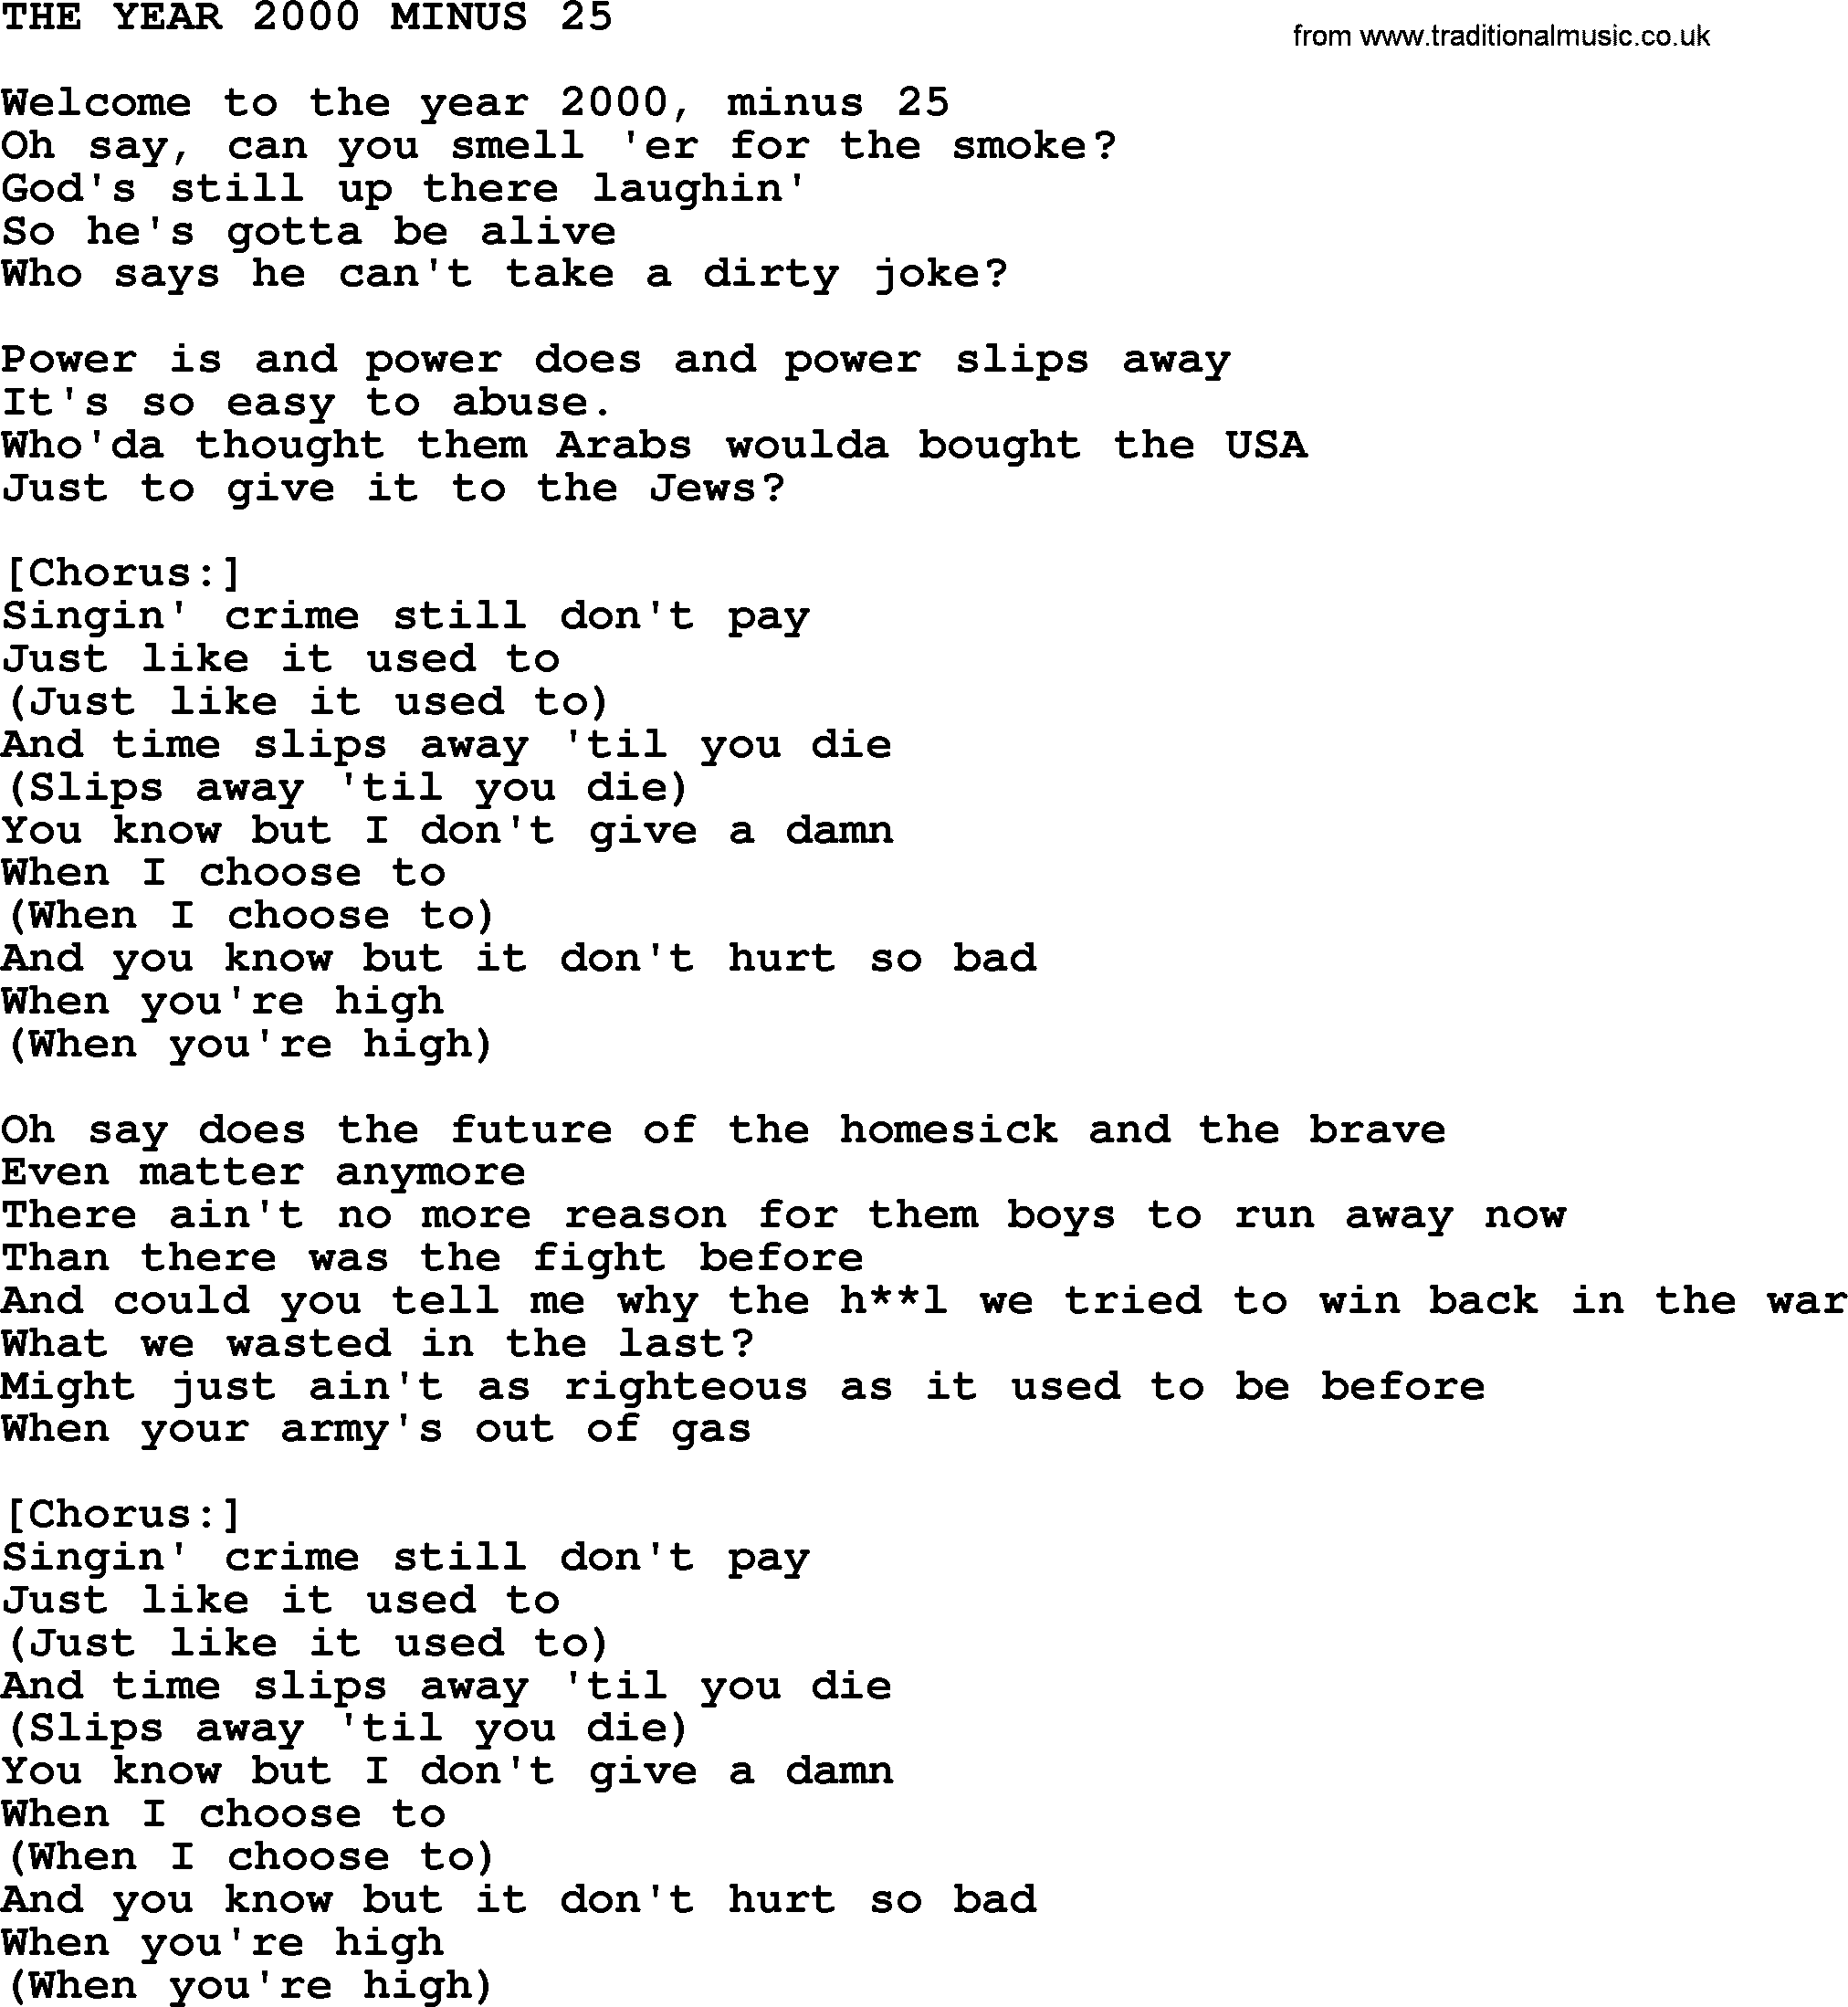 Kris Kristofferson song: The Year 2000 Minus 25 lyrics